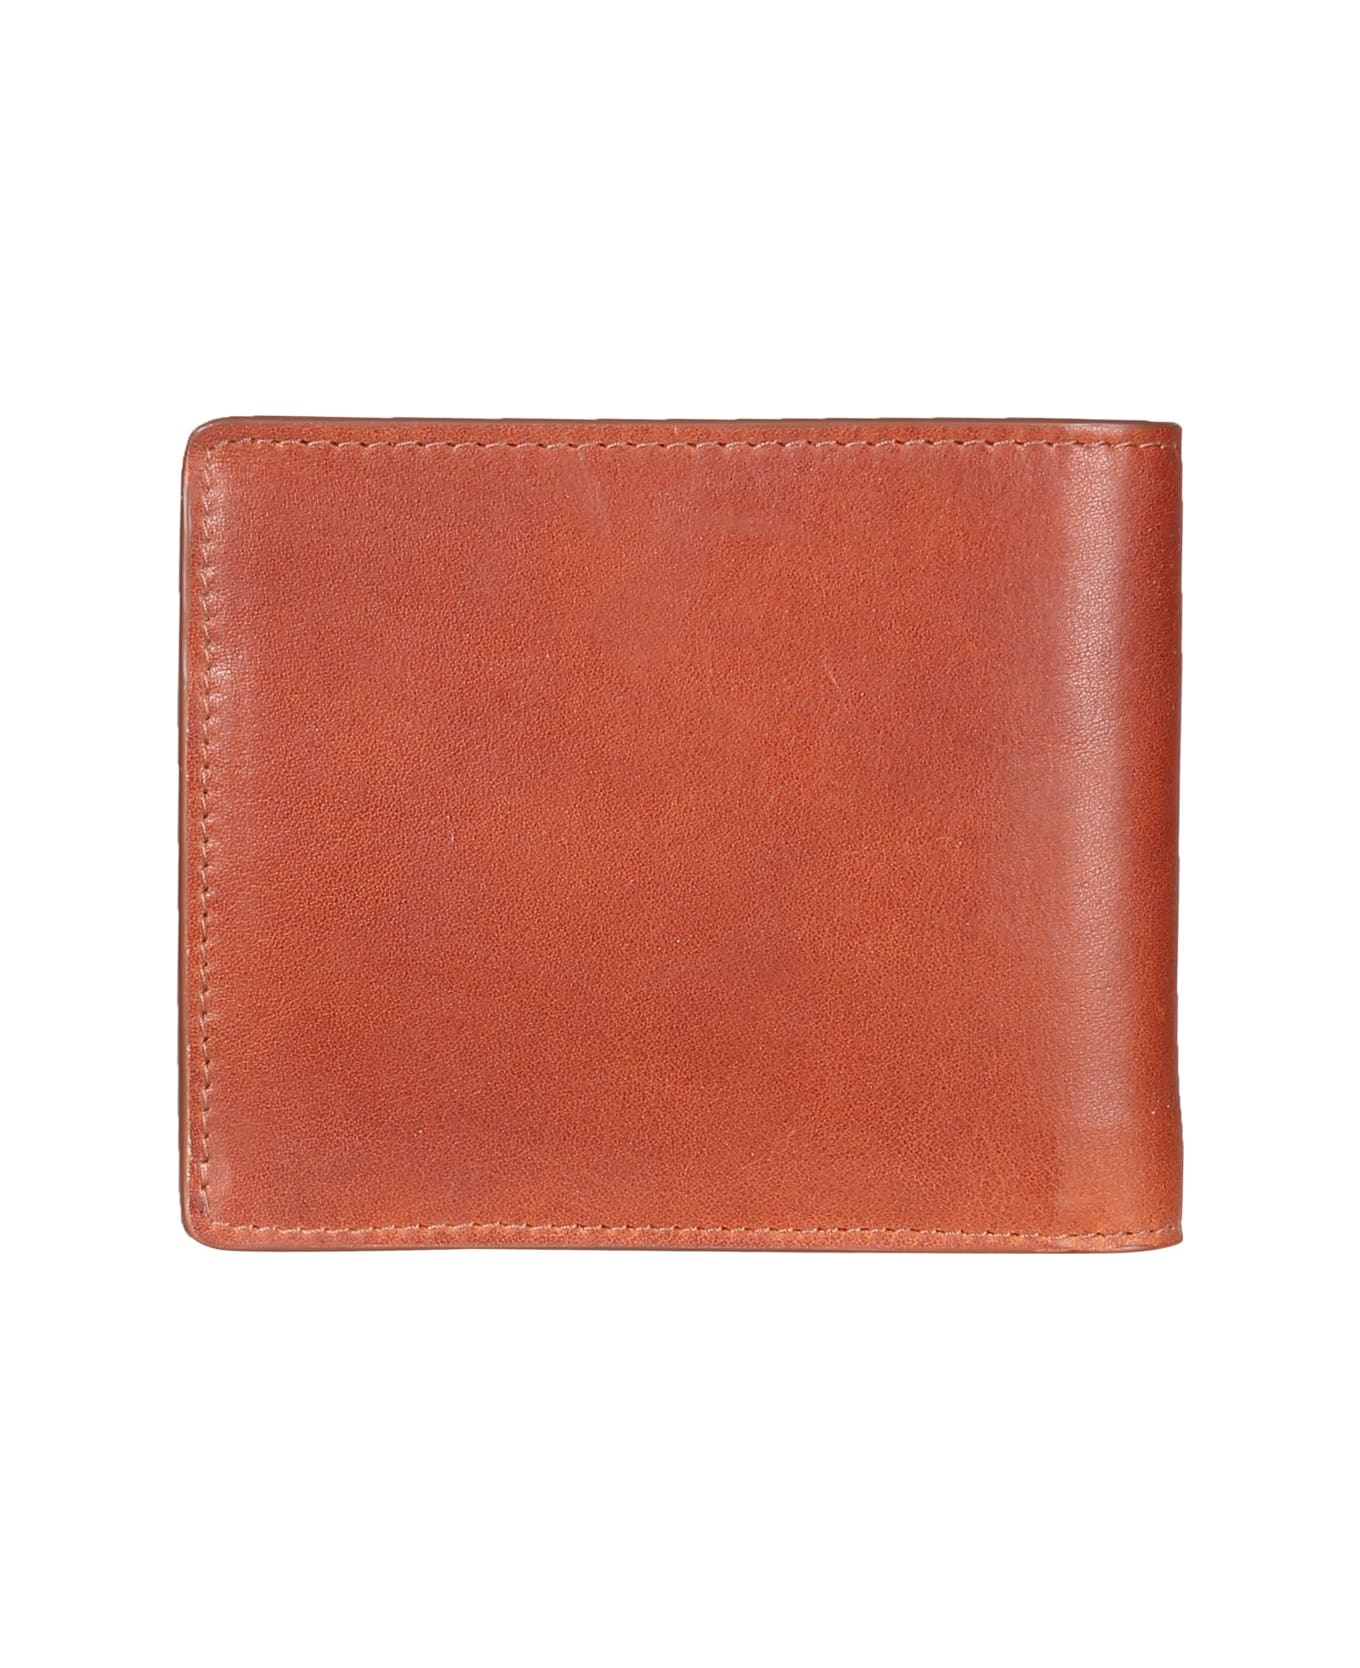 Il Bisonte Leather Bifold Wallet - MARRONE